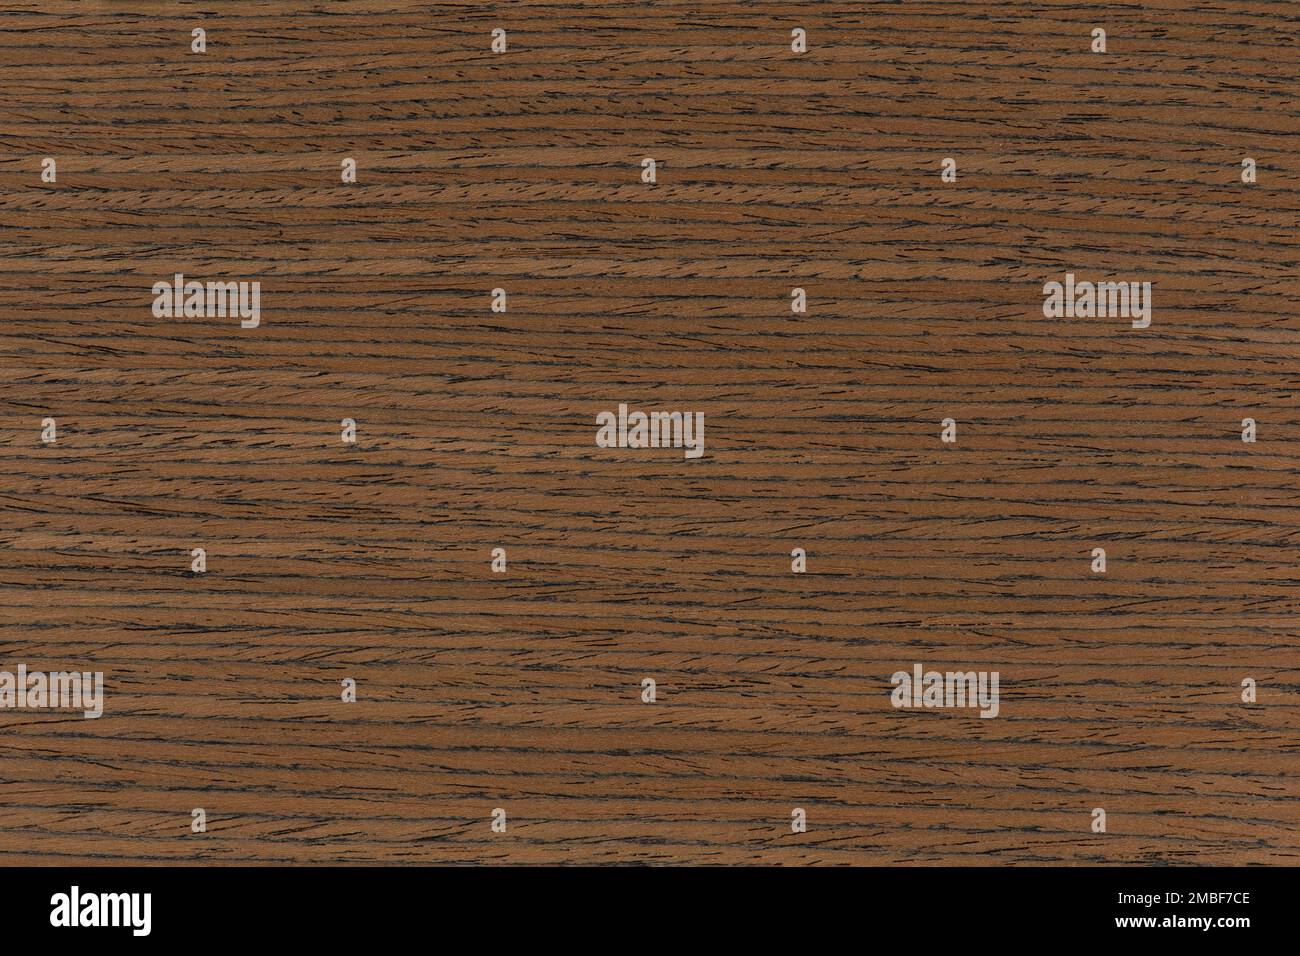 Textura de madera de teca. Textura marrón de madera de teca natural. Madera para muebles, puertas, terrazas o suelos. Foto de stock